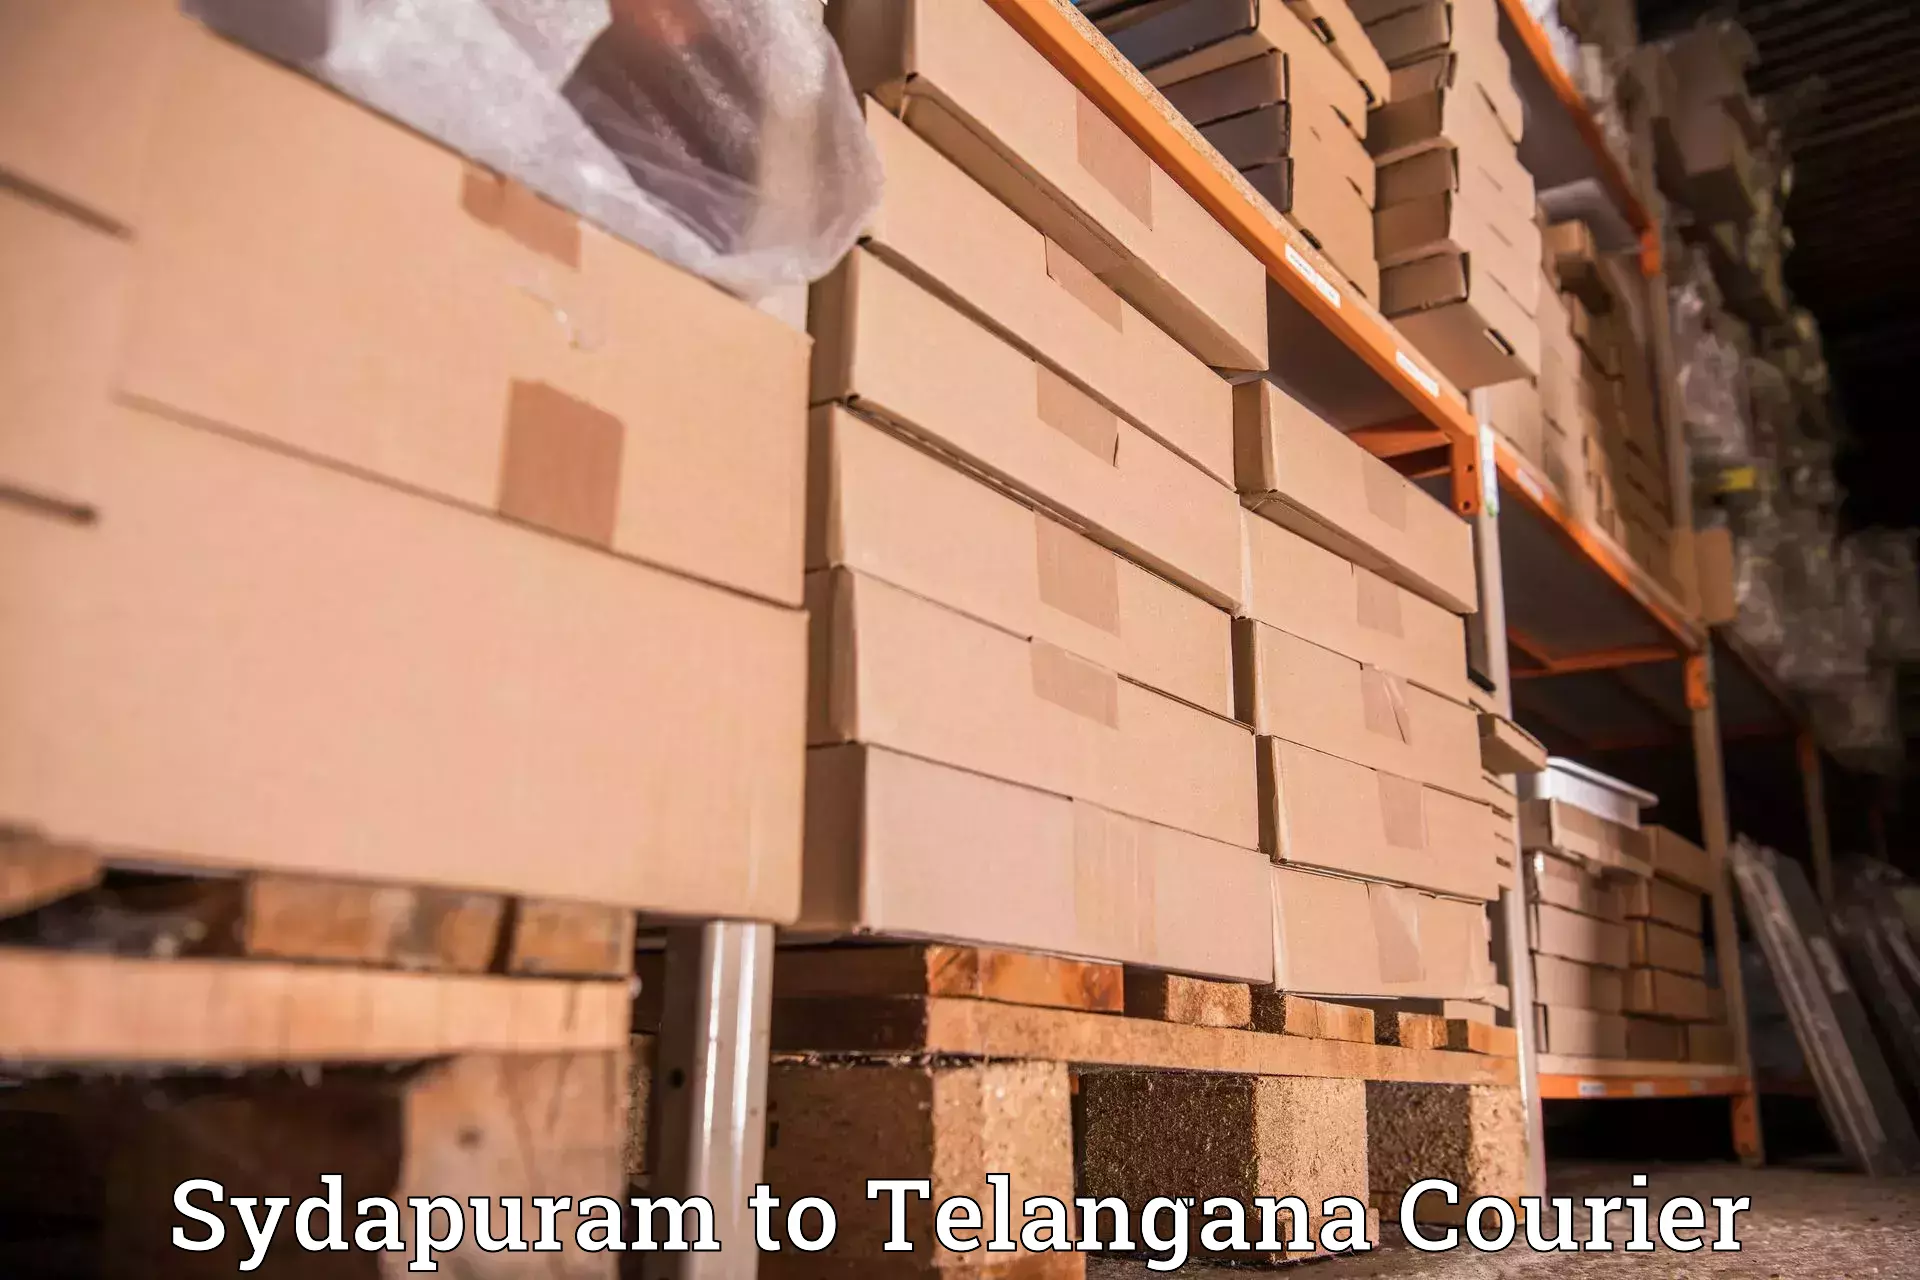 Courier service comparison Sydapuram to Bellal Tarafa Bodhan